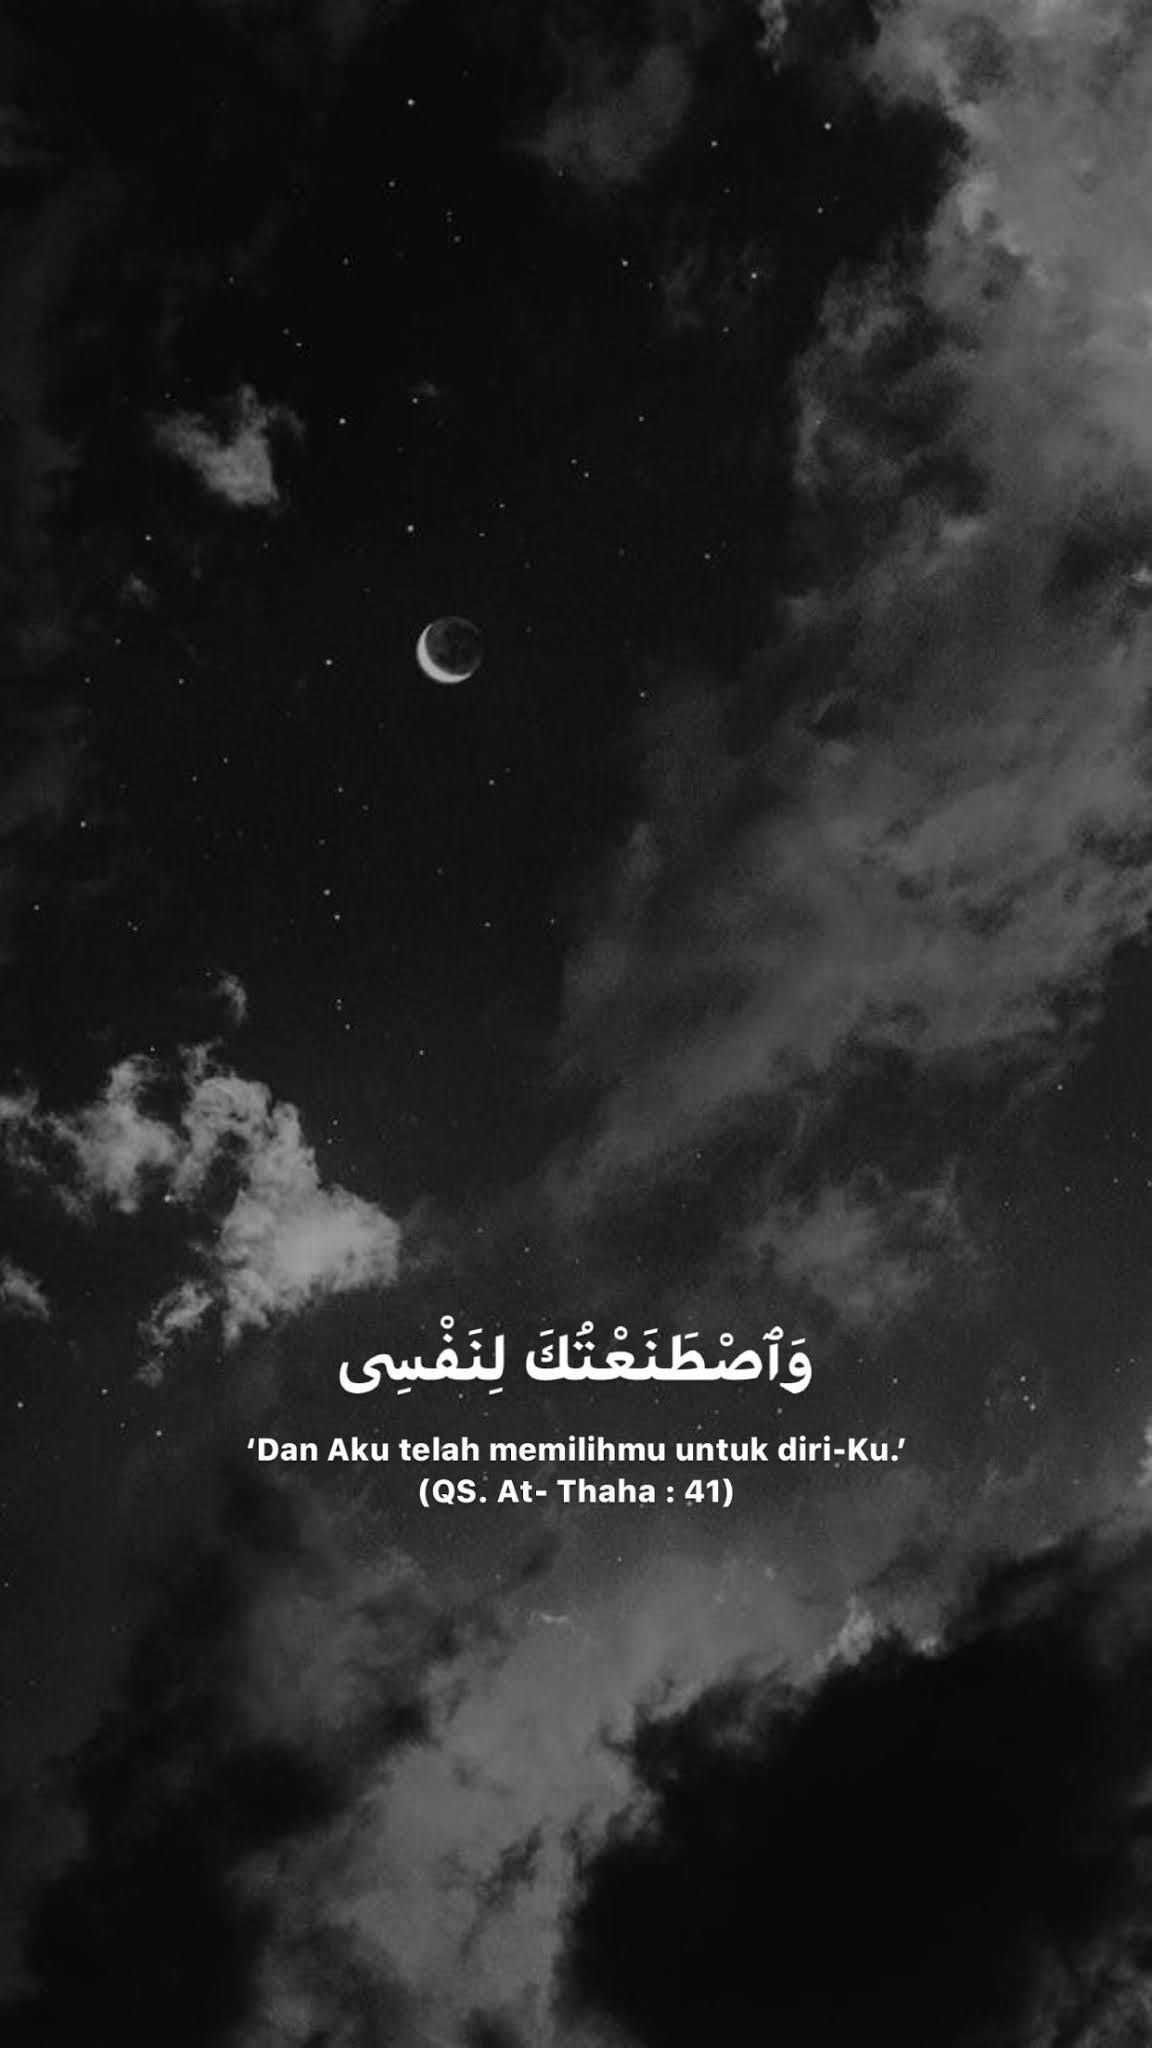 Wallpaper Islam Aesthetic Wallpaper Collection. Islamic quotes, Good night quotes, Kutipan inspirasional